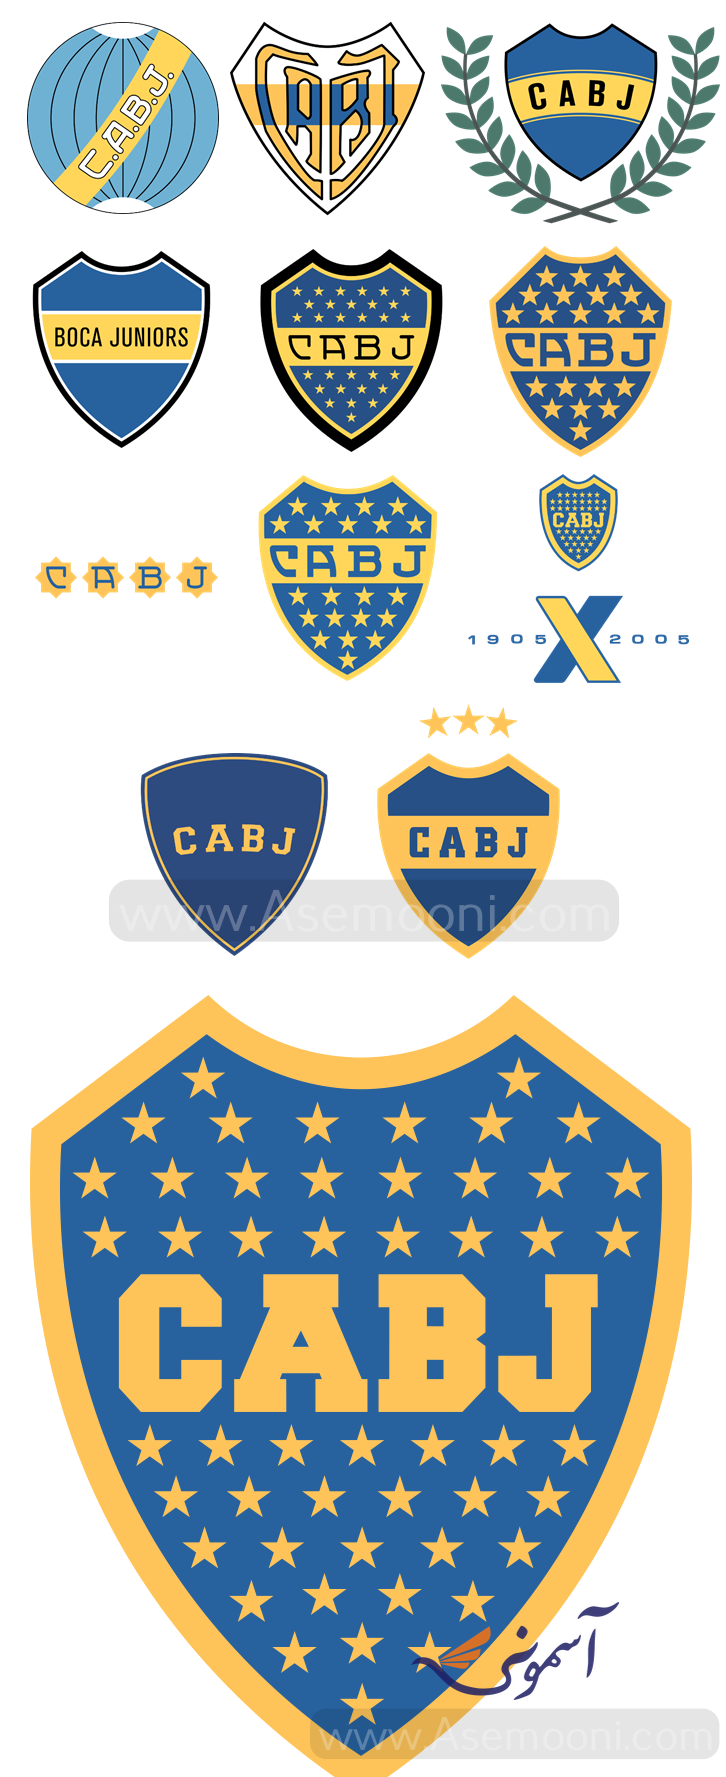 boca-juniors-logo-during-time